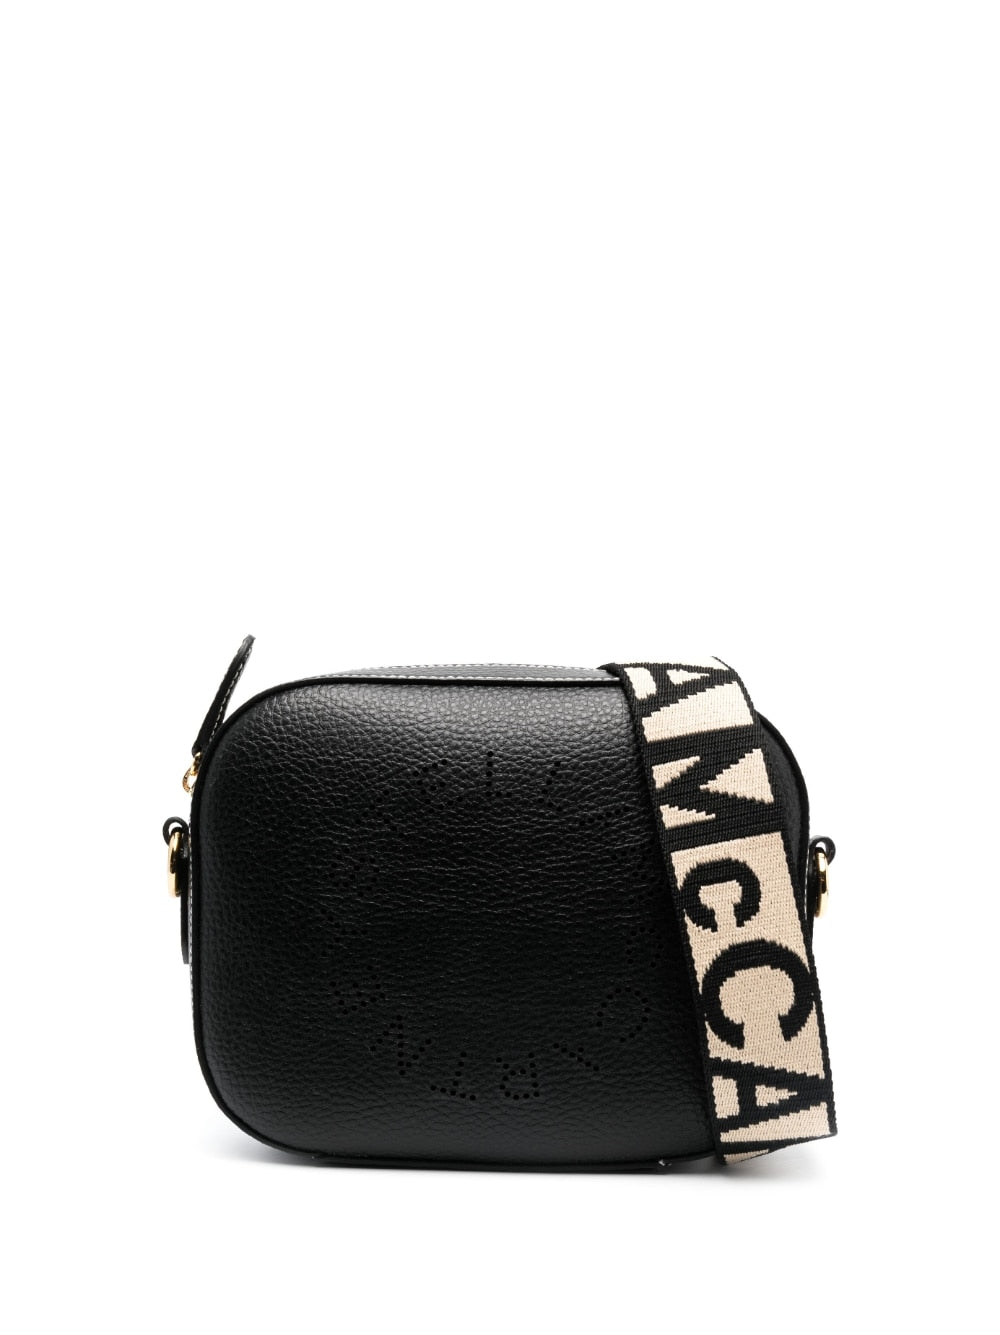 STELLA MCCARTNEY Mini Stella Logo Black Faux Leather Crossbody Handbag with Gold-Tone Accents